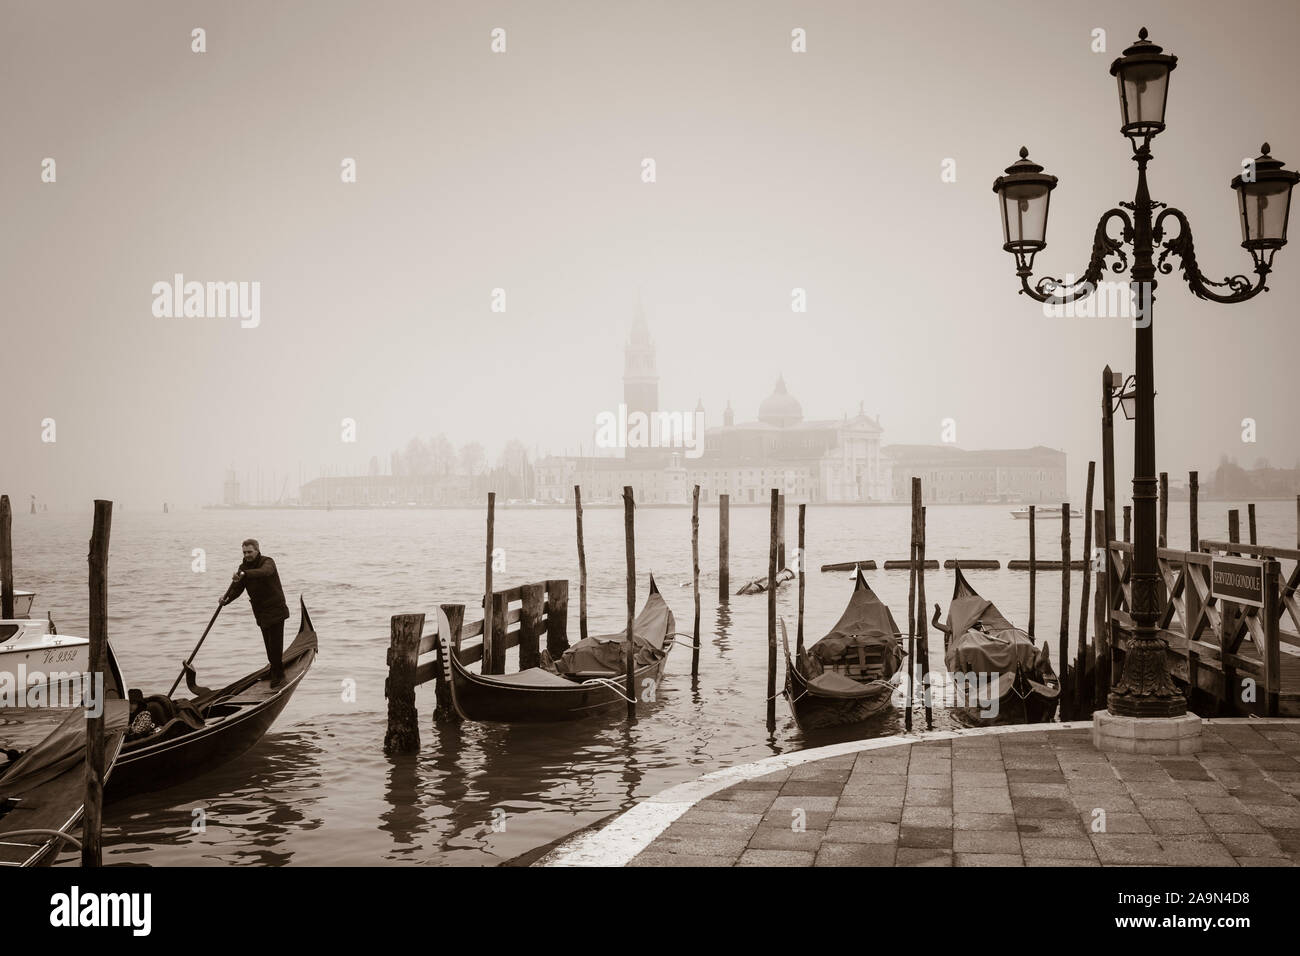 VENICE, ITALY - December 23, 2012. Venice gondola scene in winter with mist on the lagoon. Romantic, retro sepia toned image Stock Photo